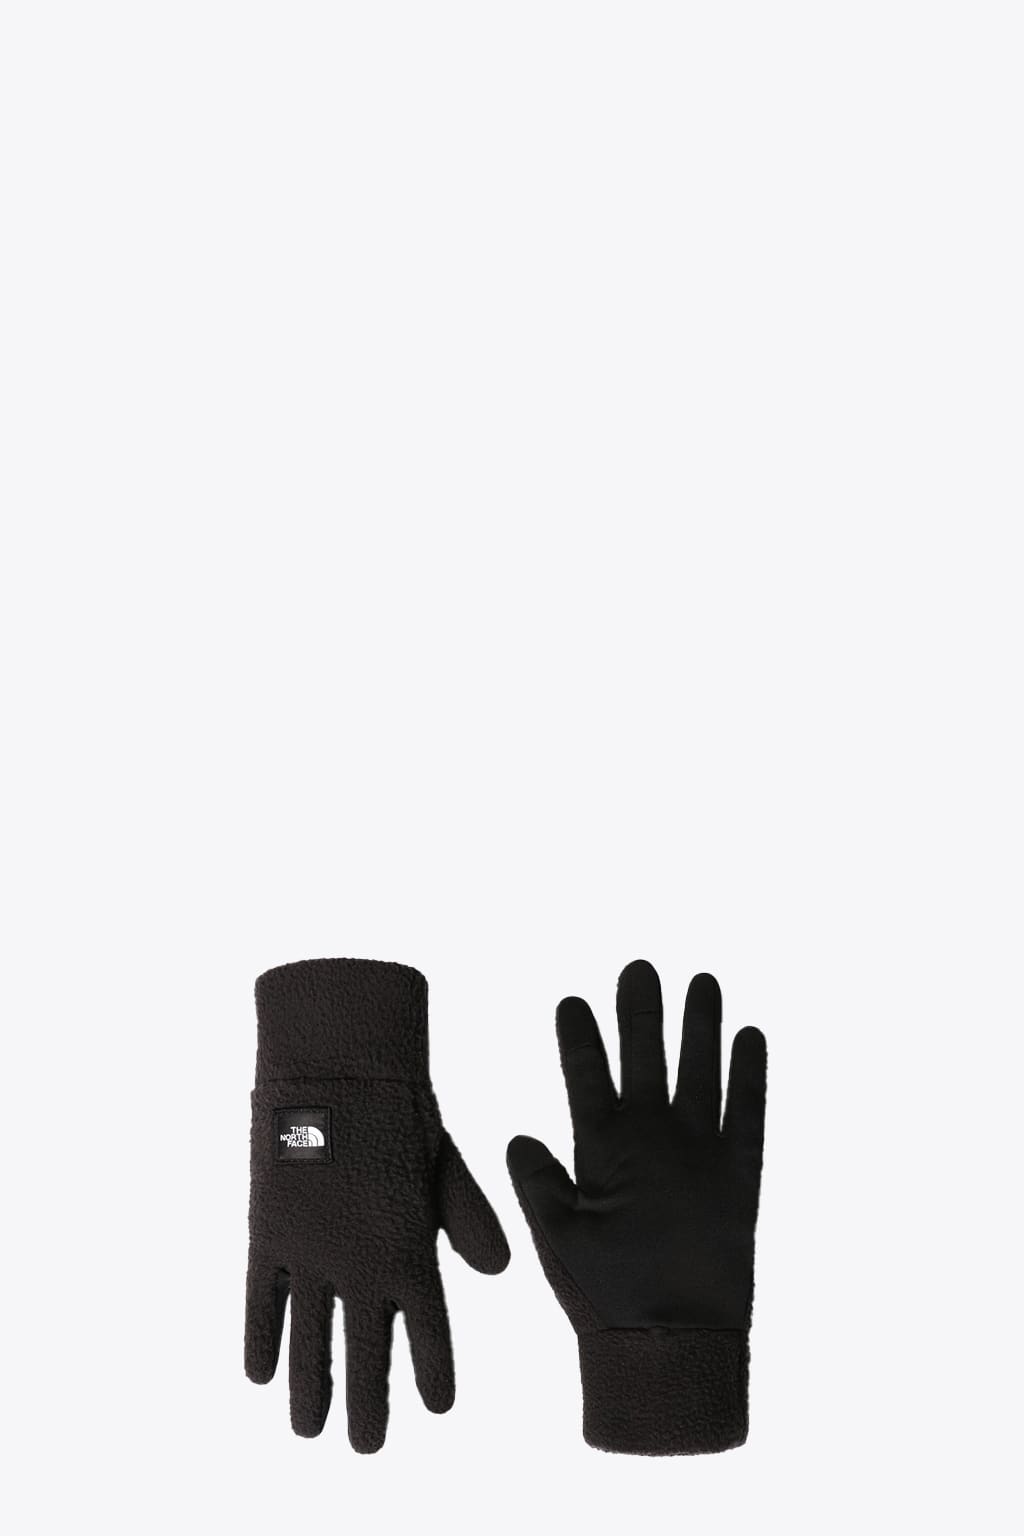 The North Face Fleeski Etip Glove Black fleece gloves - Fleeski etip glove